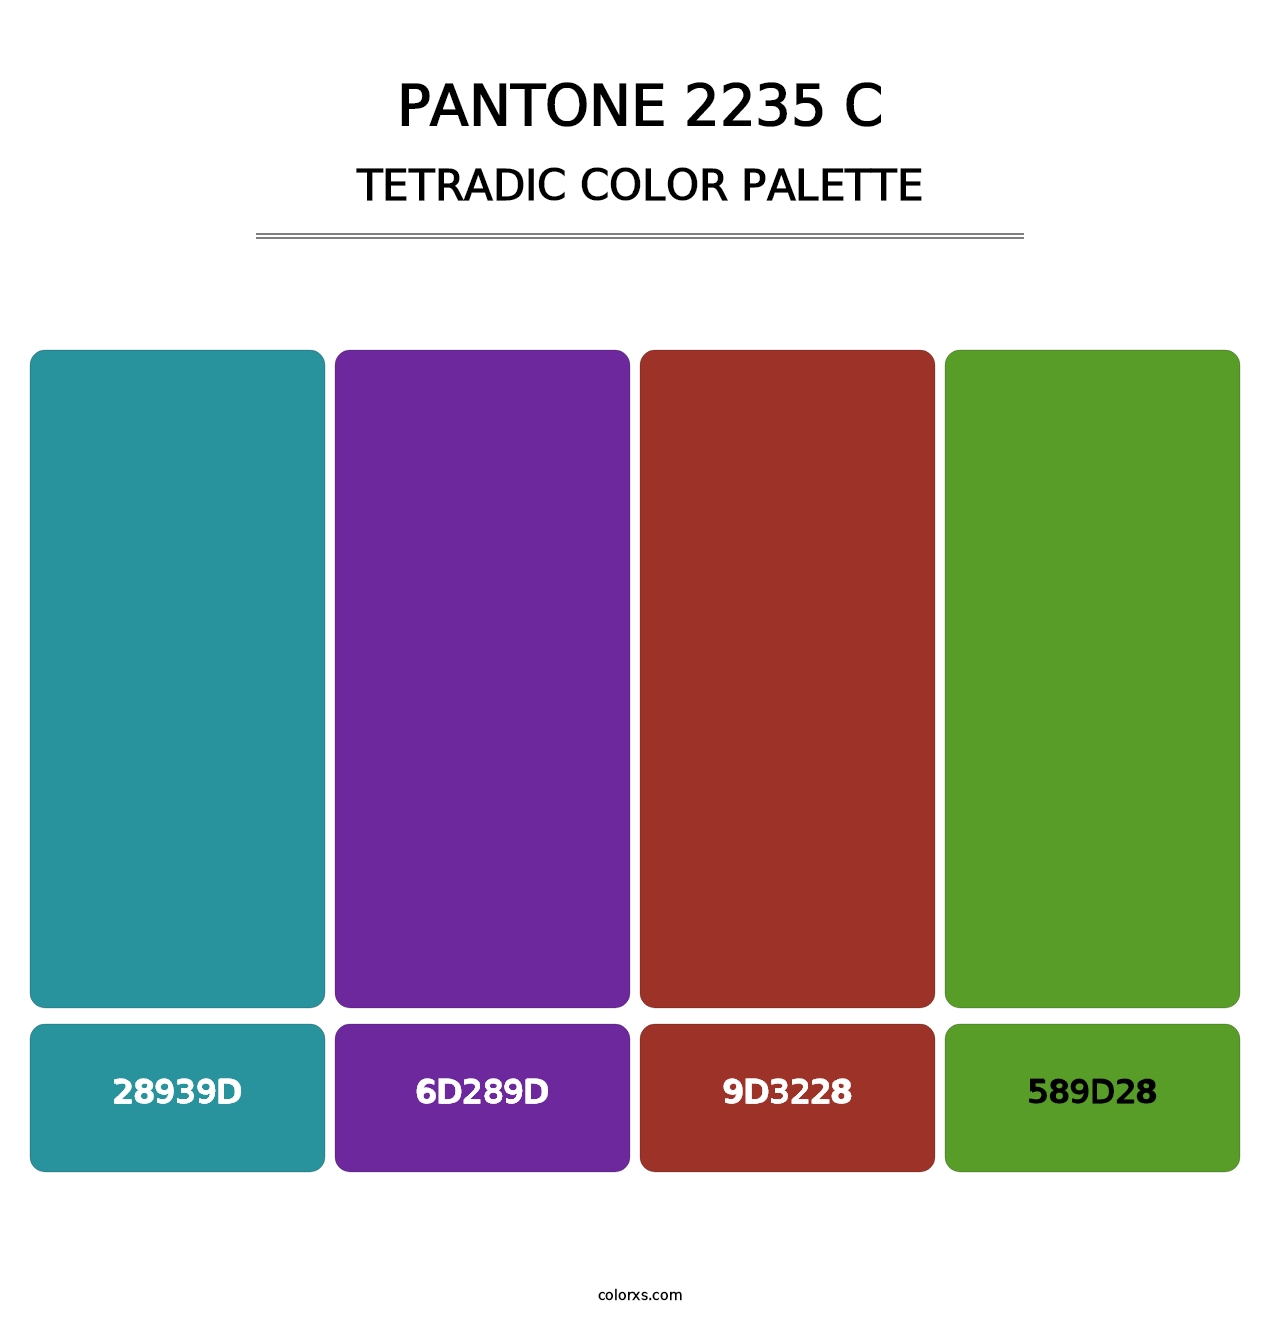 PANTONE 2235 C - Tetradic Color Palette